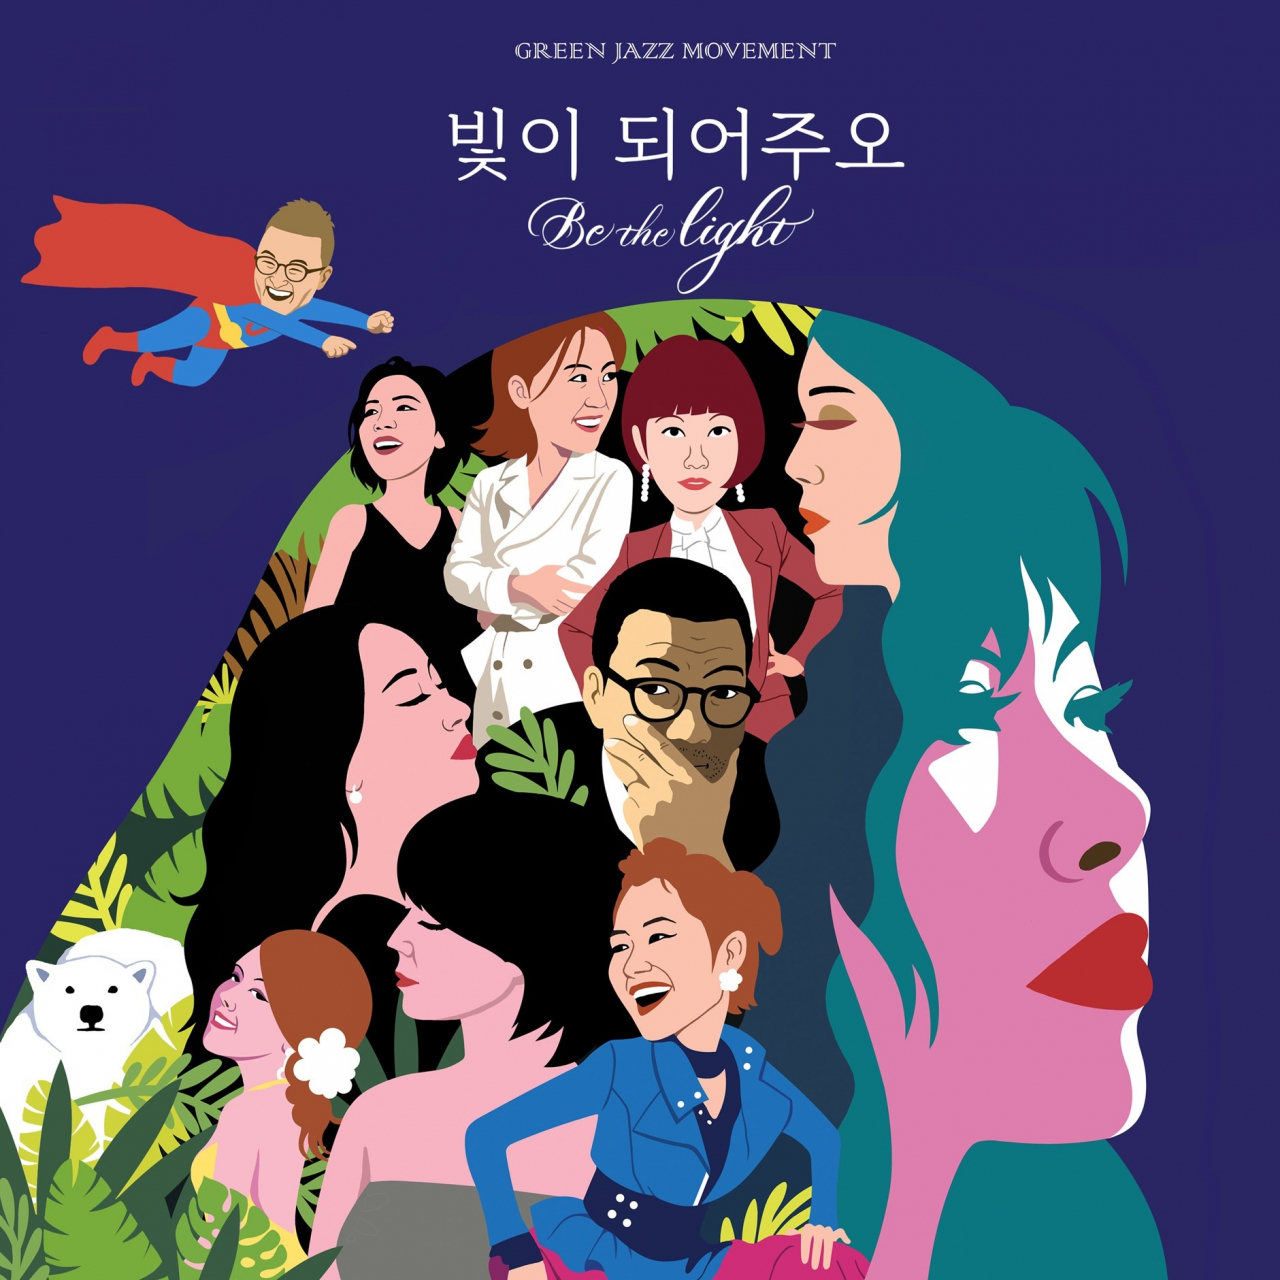 Poster for the Green Jazz Movement (Korea Jazz Association)